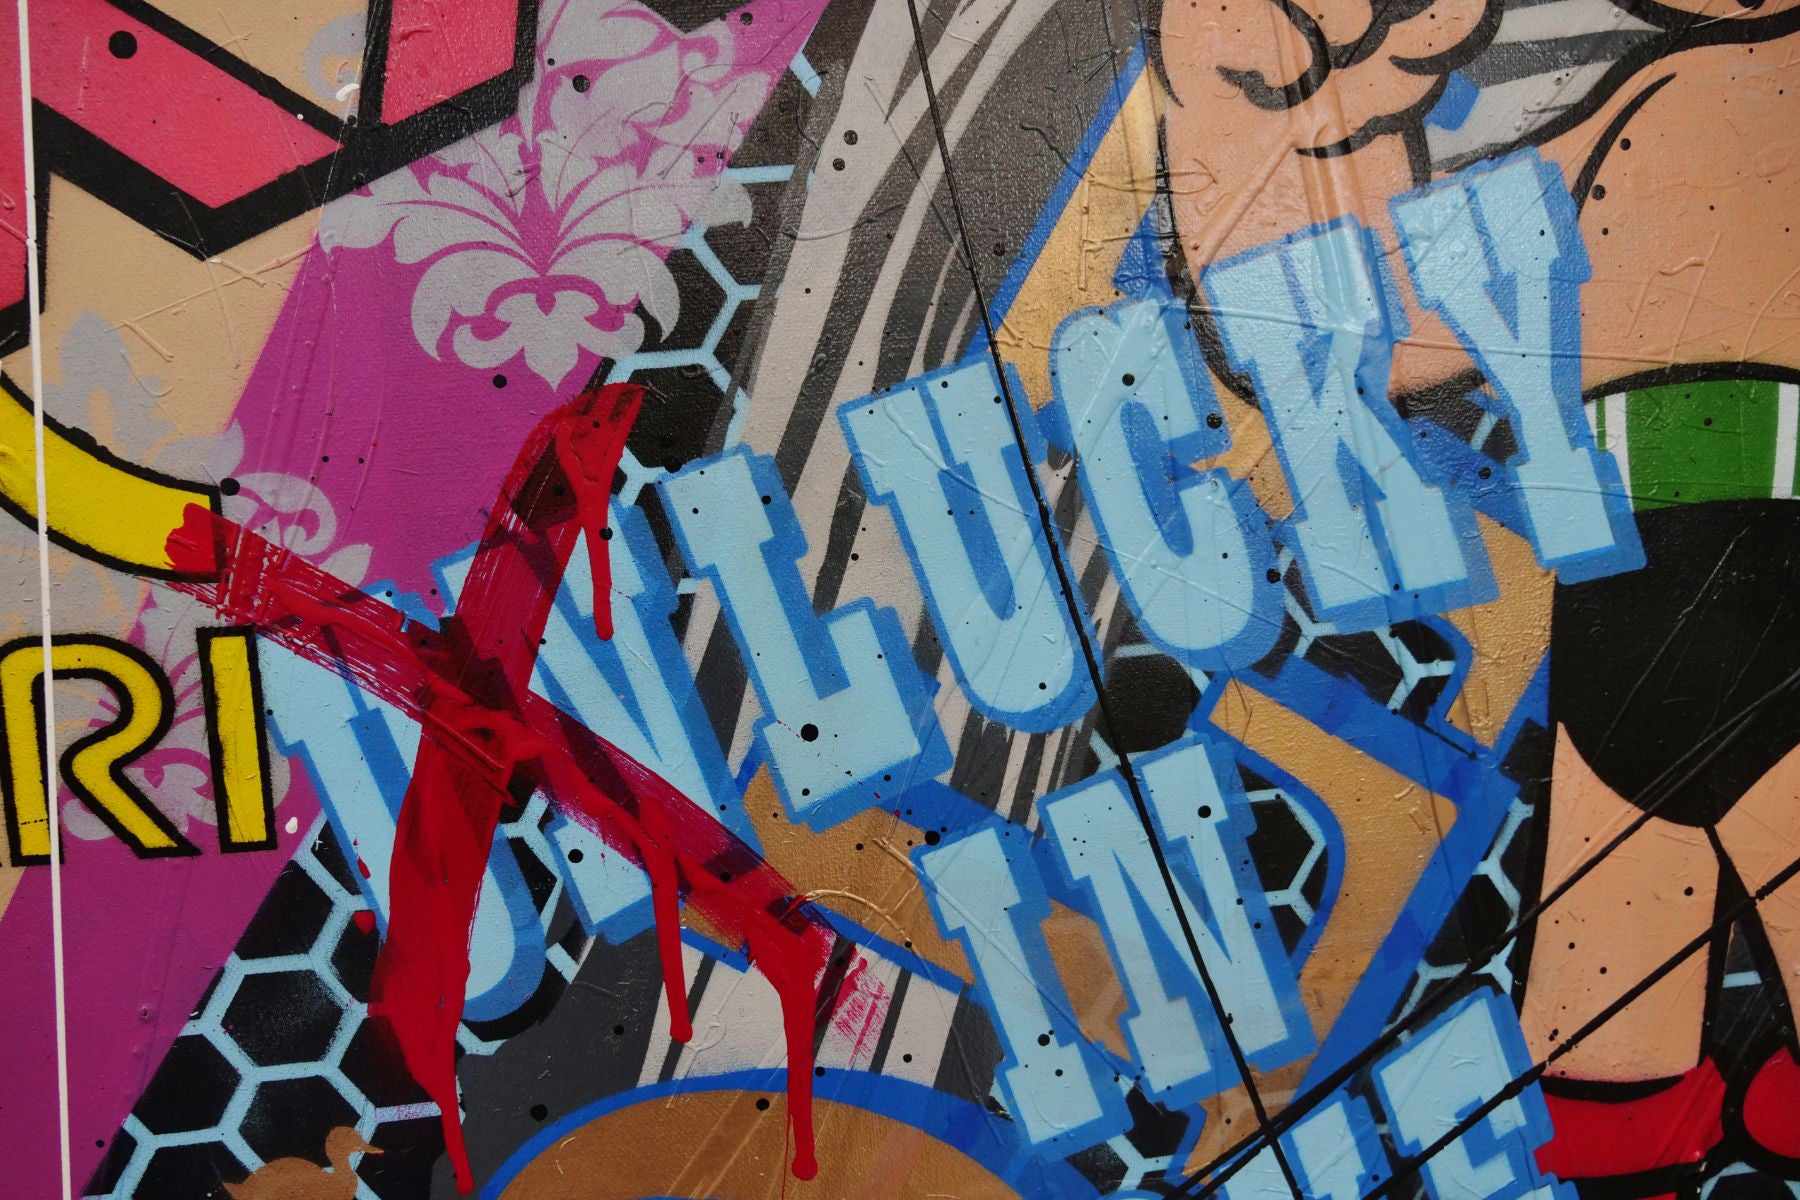 I Yam Popeye 240cm x 120cm Popeye Textured Urban Pop Art Painting (SOLD)